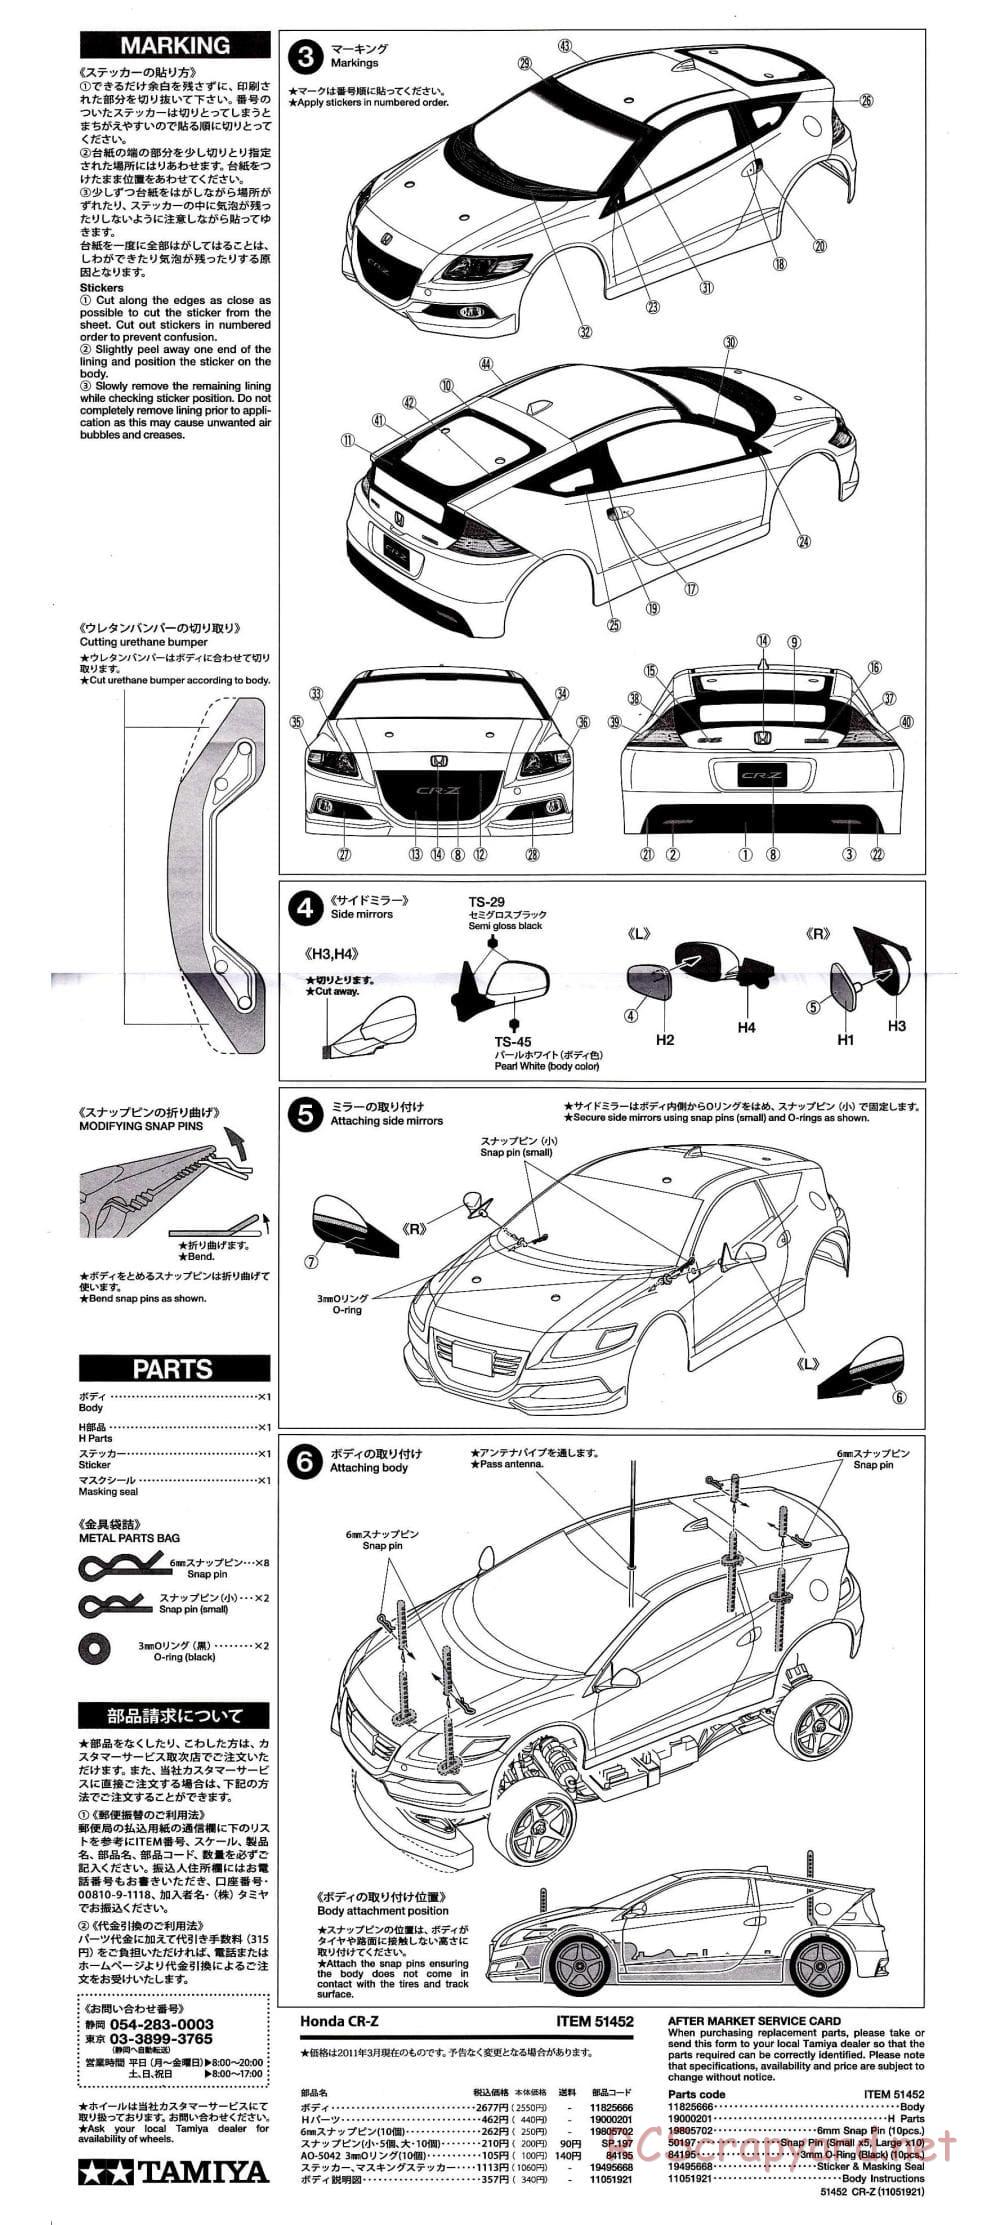 Tamiya - Honda CR-Z - Body - Manual - Page 2